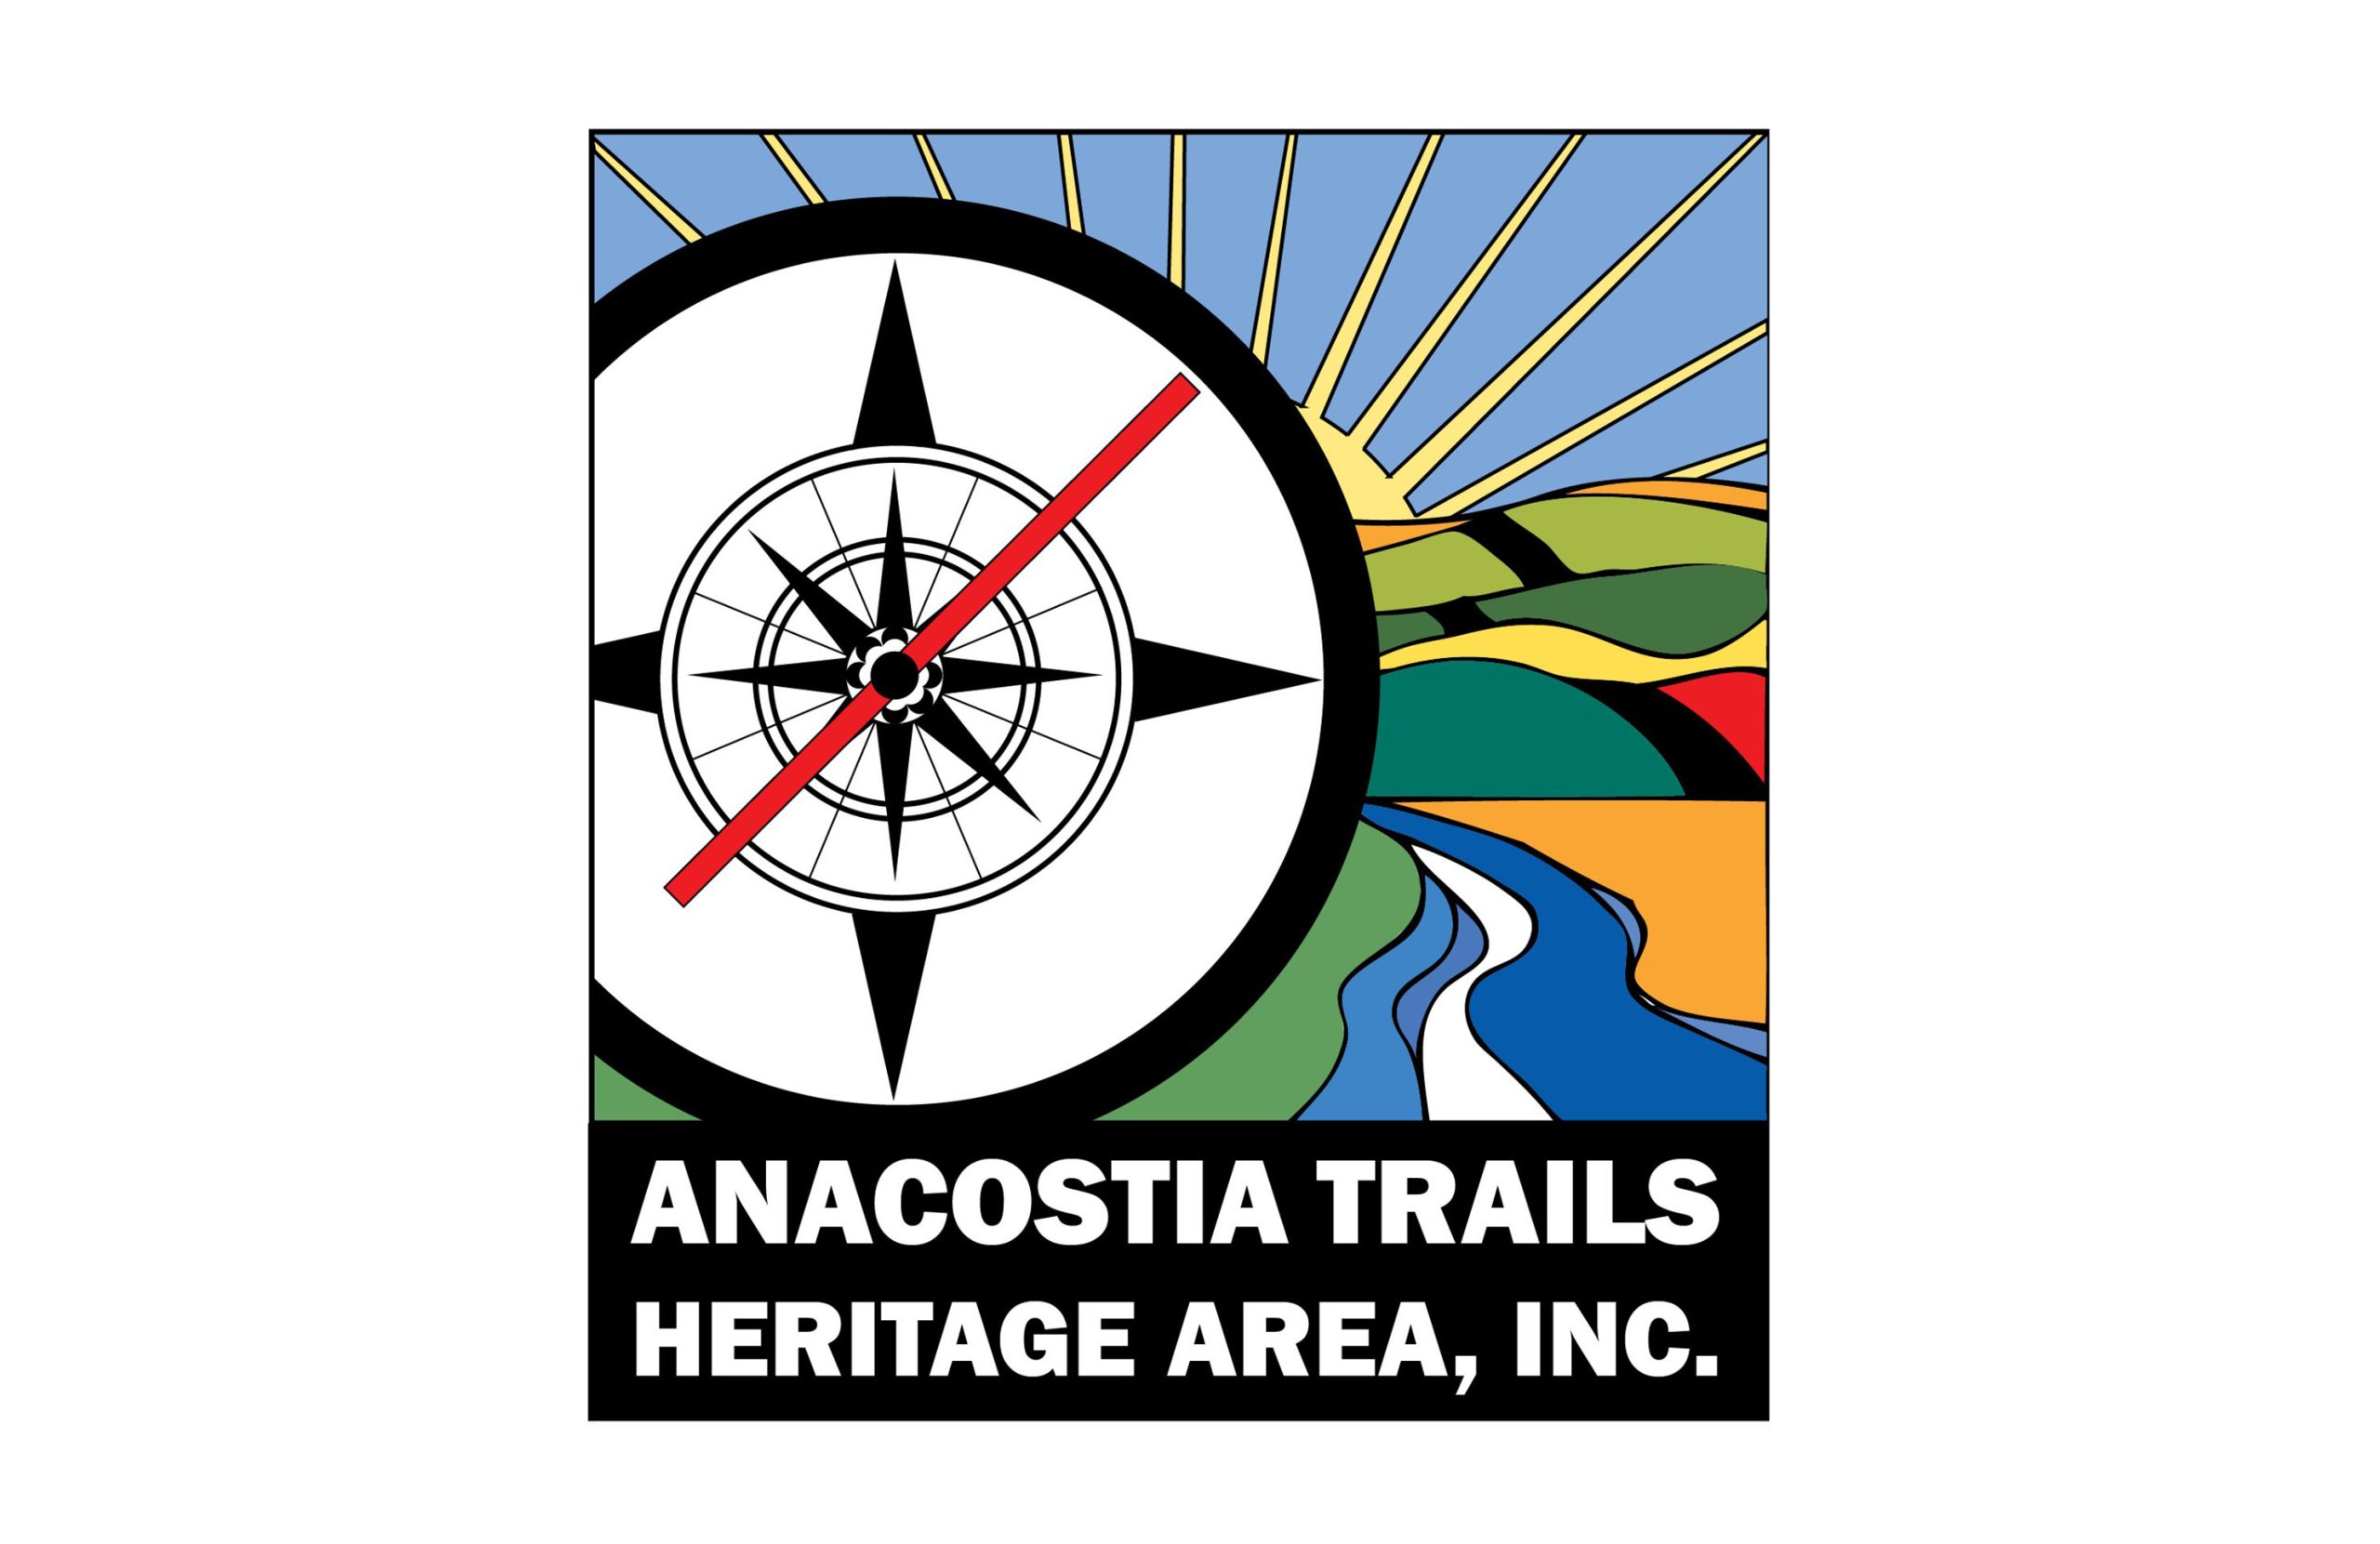 Anacostia Trails Heritage Area